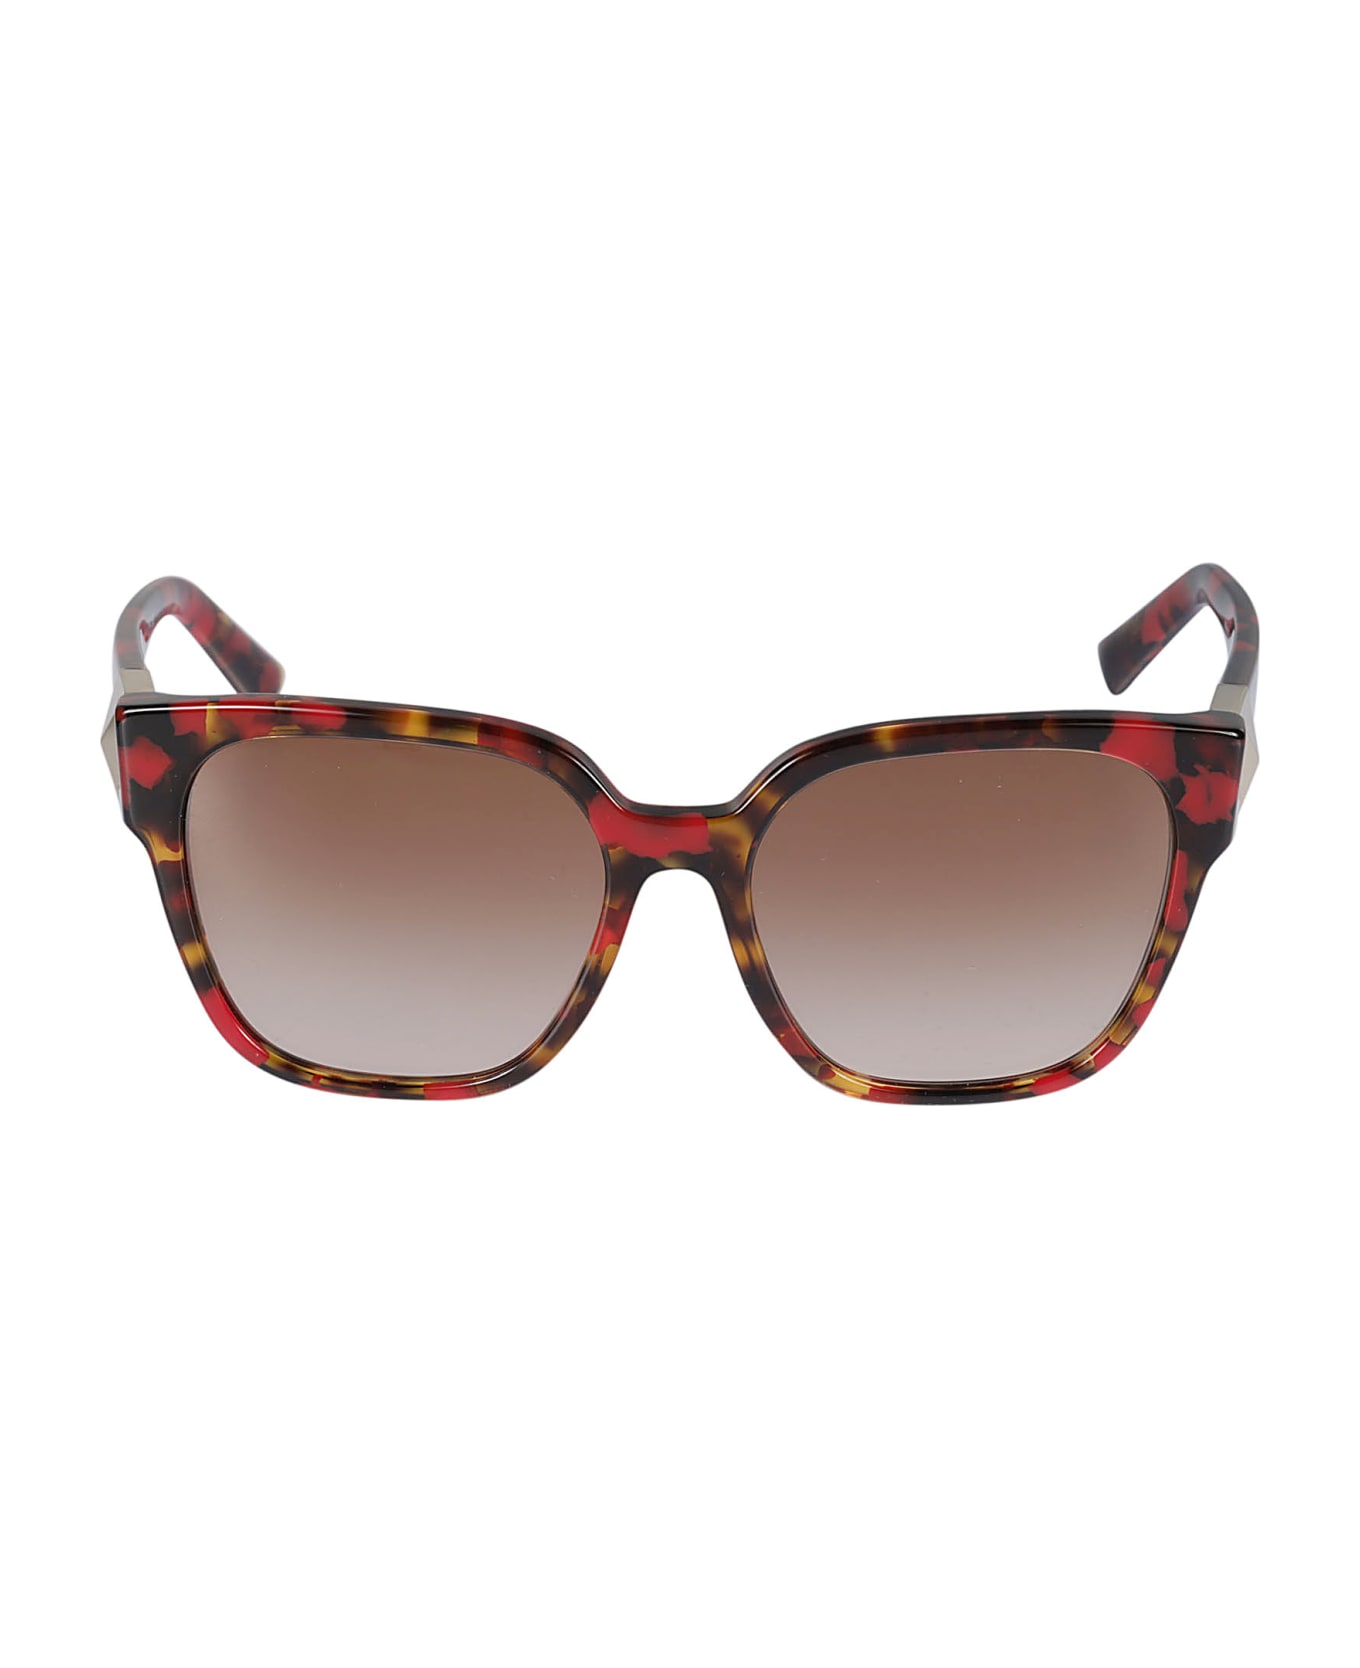 Valentino Eyewear Sole519413 Sunglasses - 519413